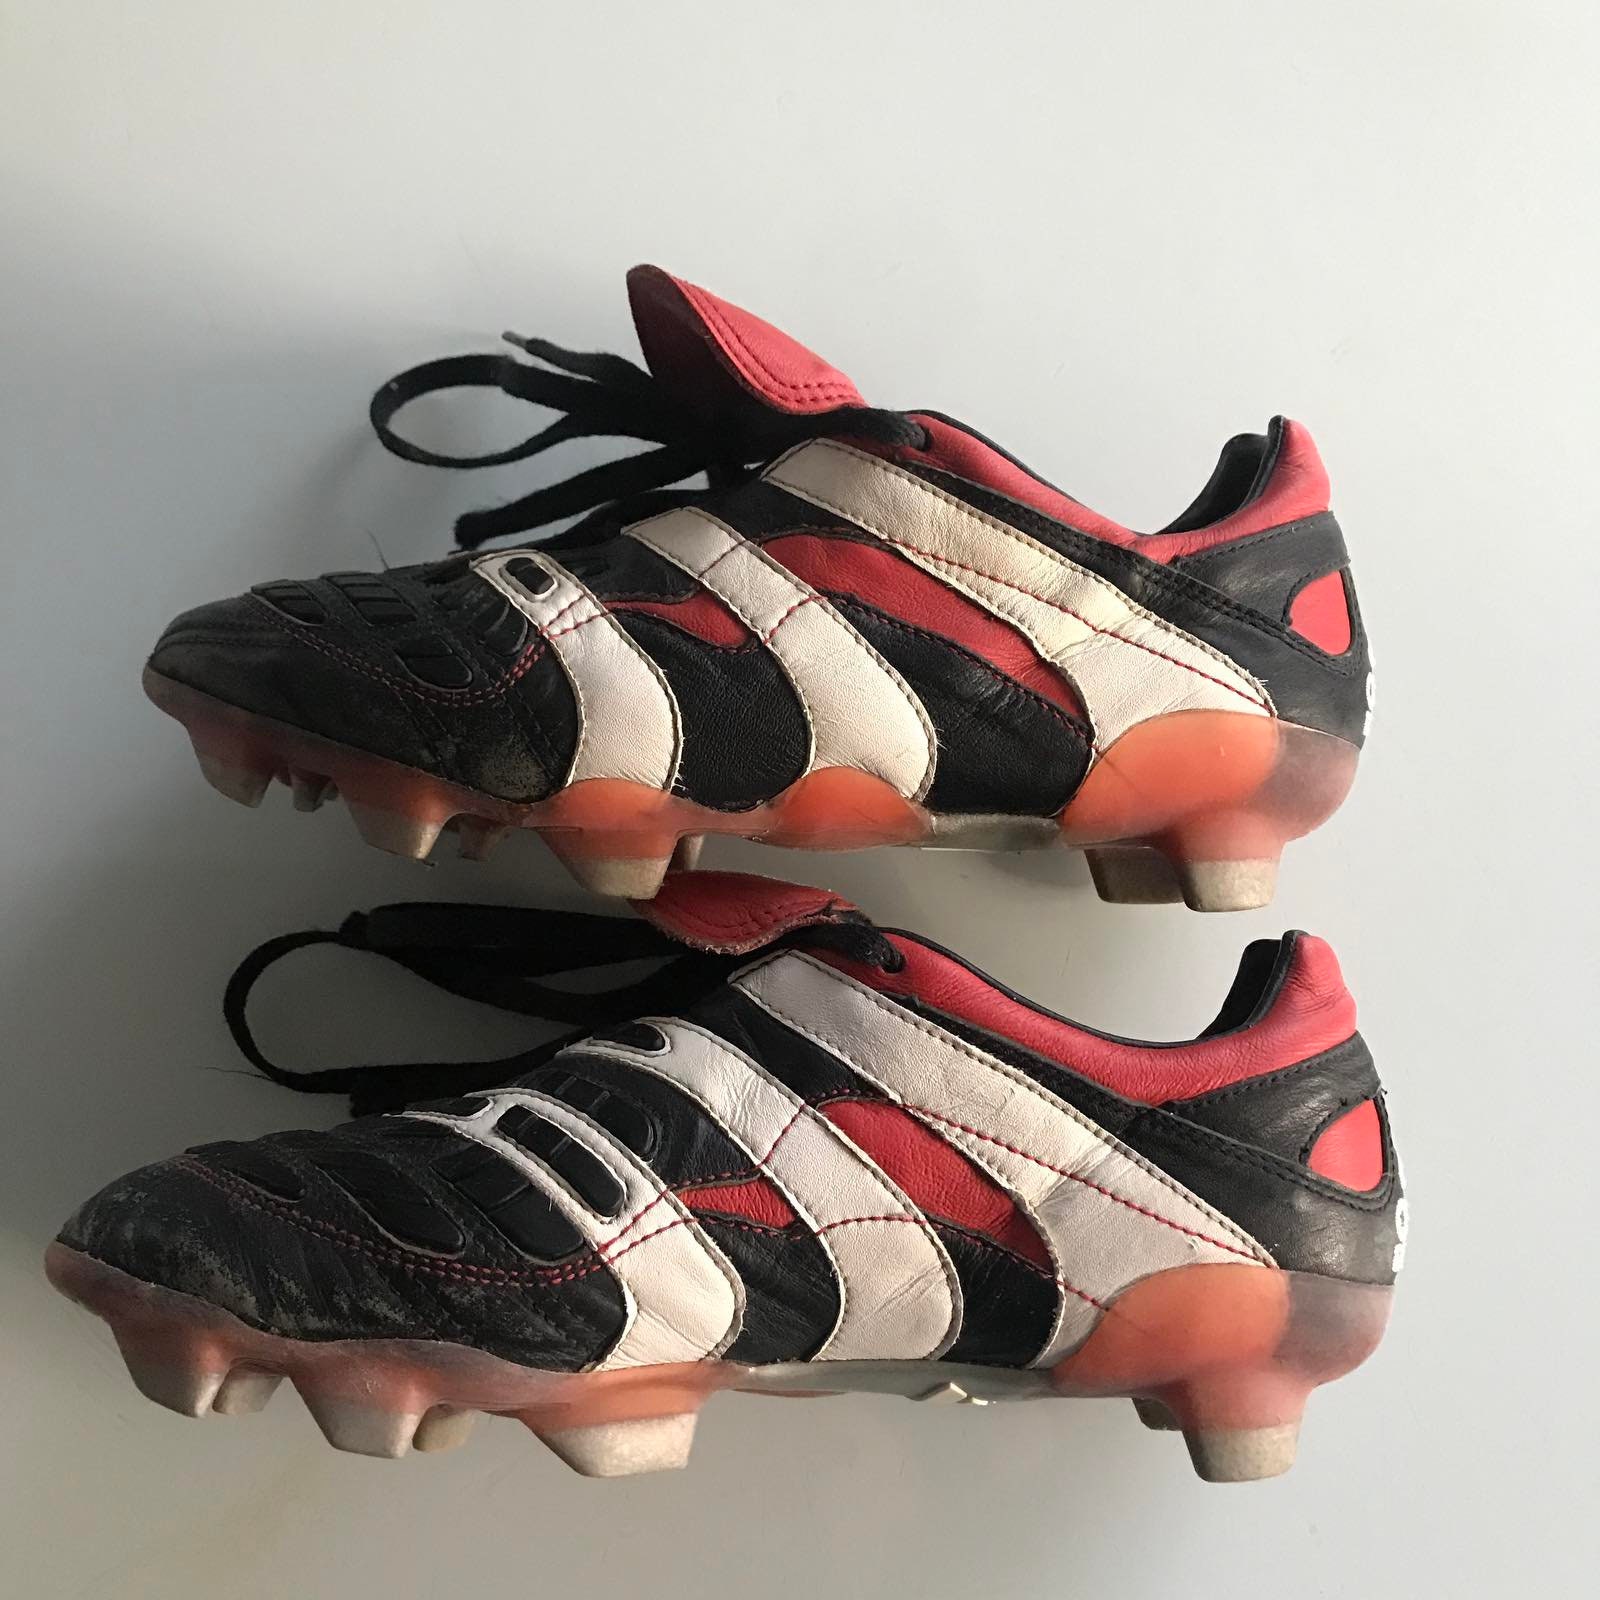 Rare Adidas Accelerator Vintage Football Boots 98s Etsy New Zealand